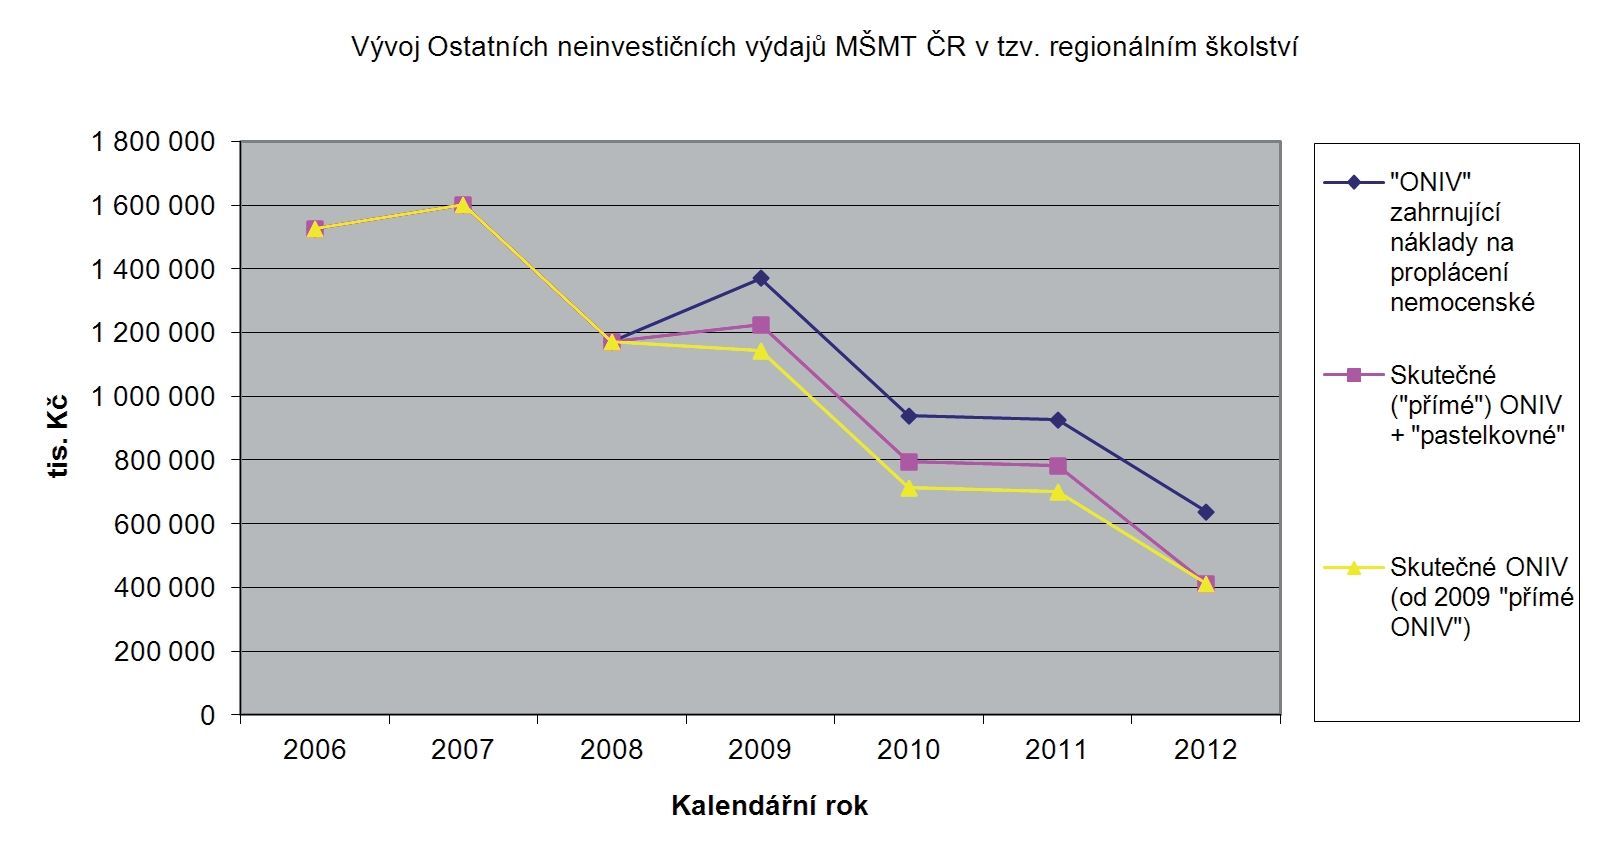 Vývoj ONIV MŠMT v ČR za léta 2006 - 2012